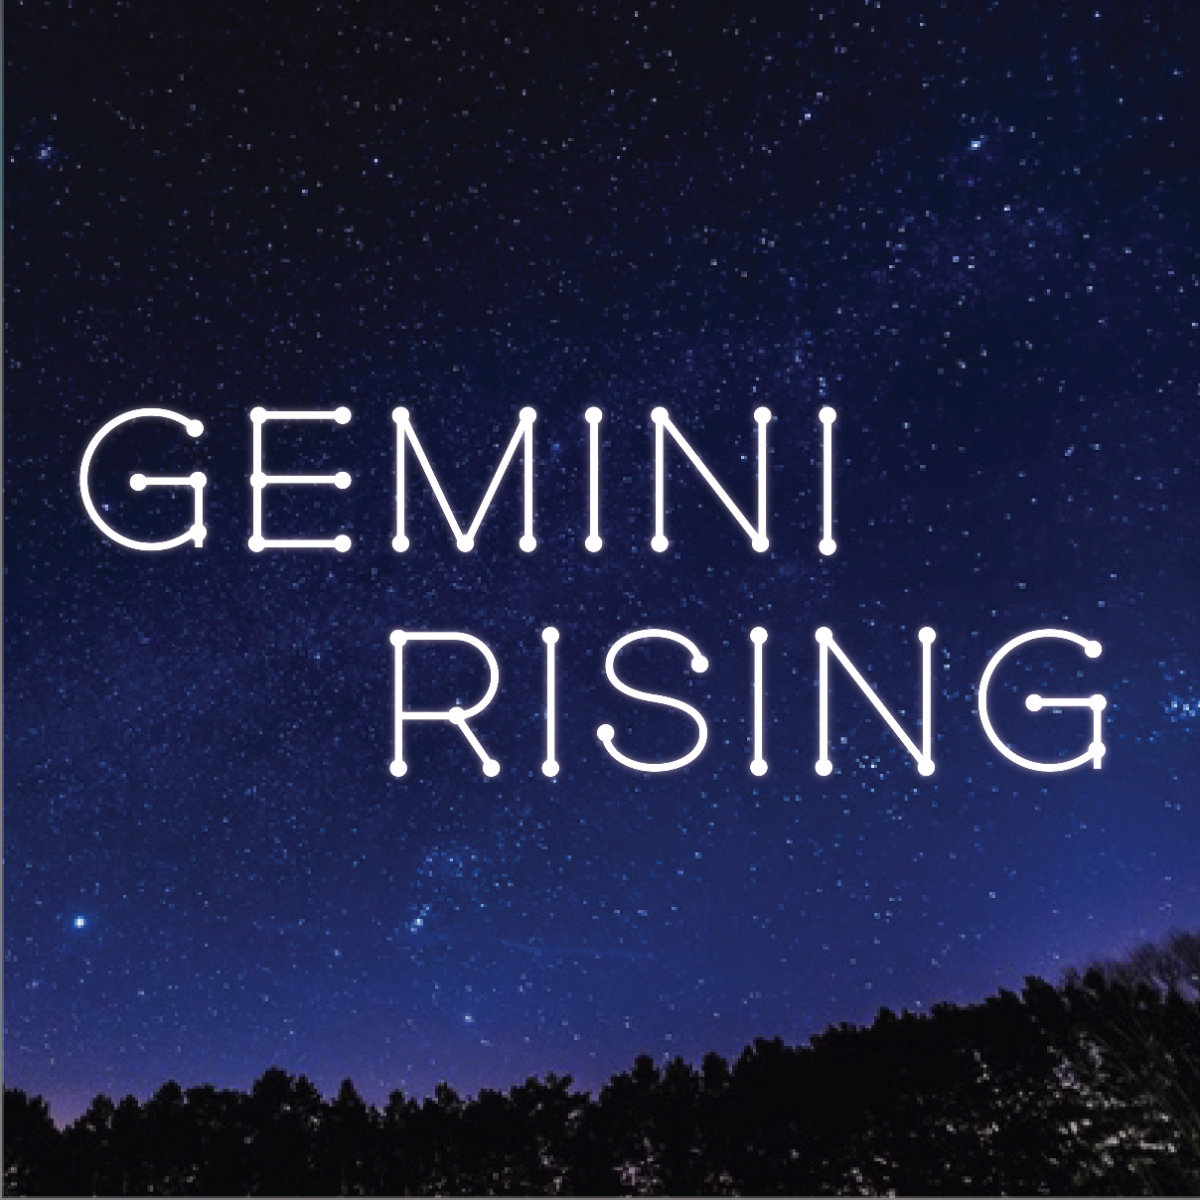 Gemini Rising - Film and Storytelling | Seed&Spark